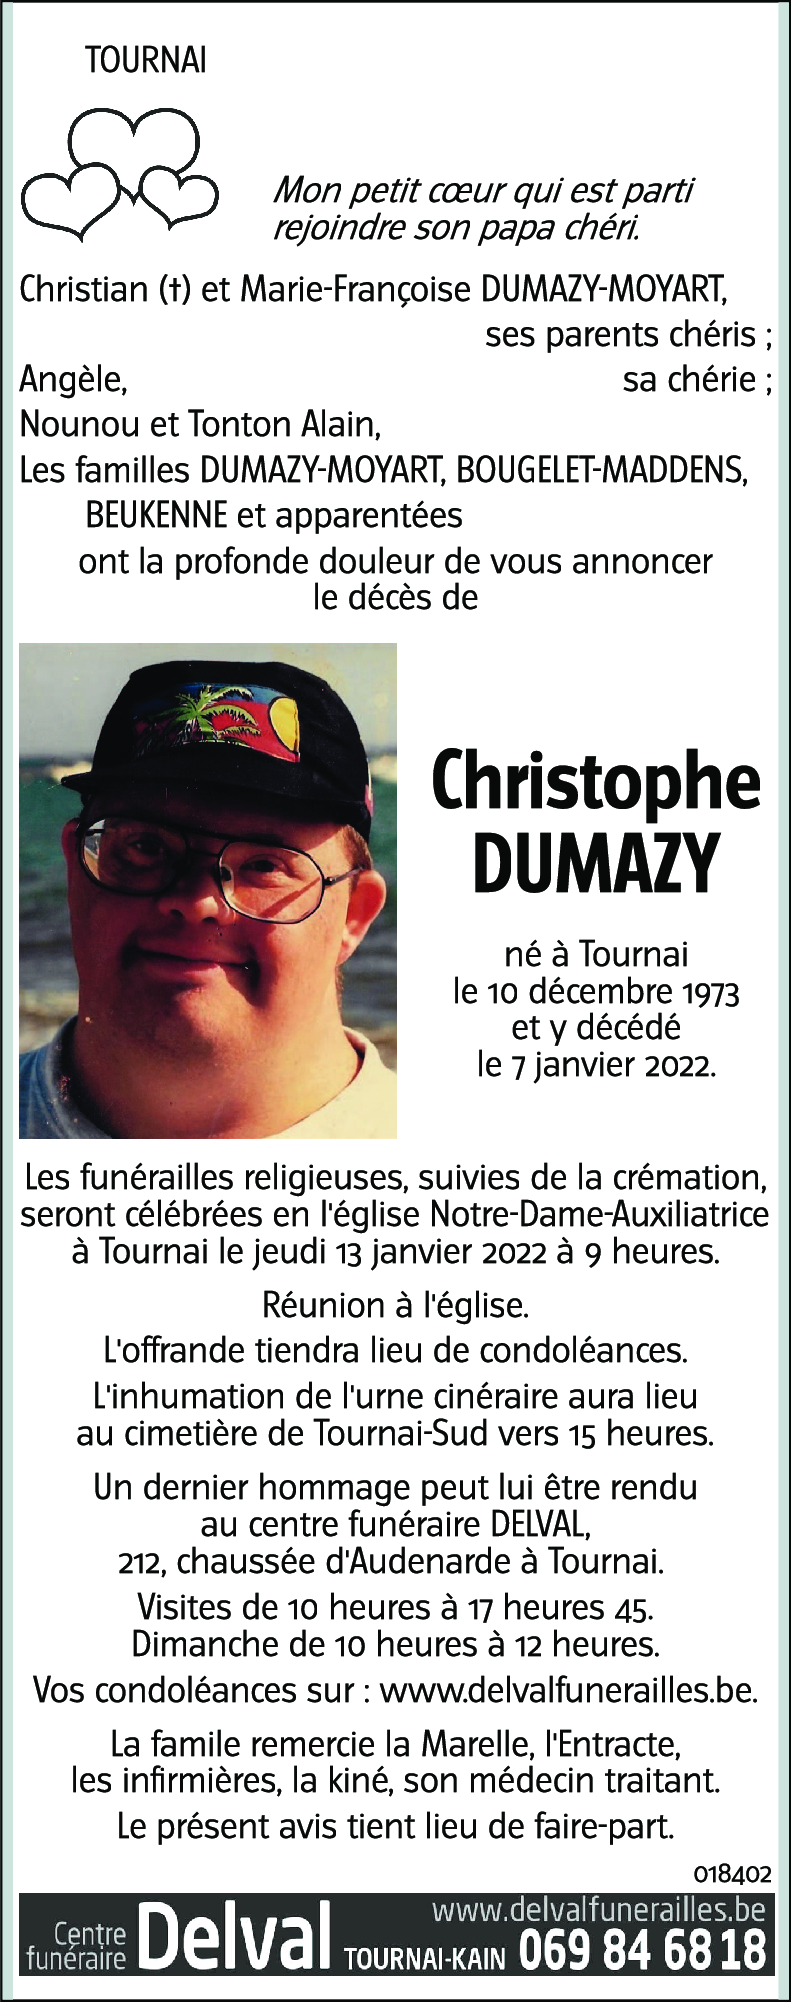 Christophe DUMAZY